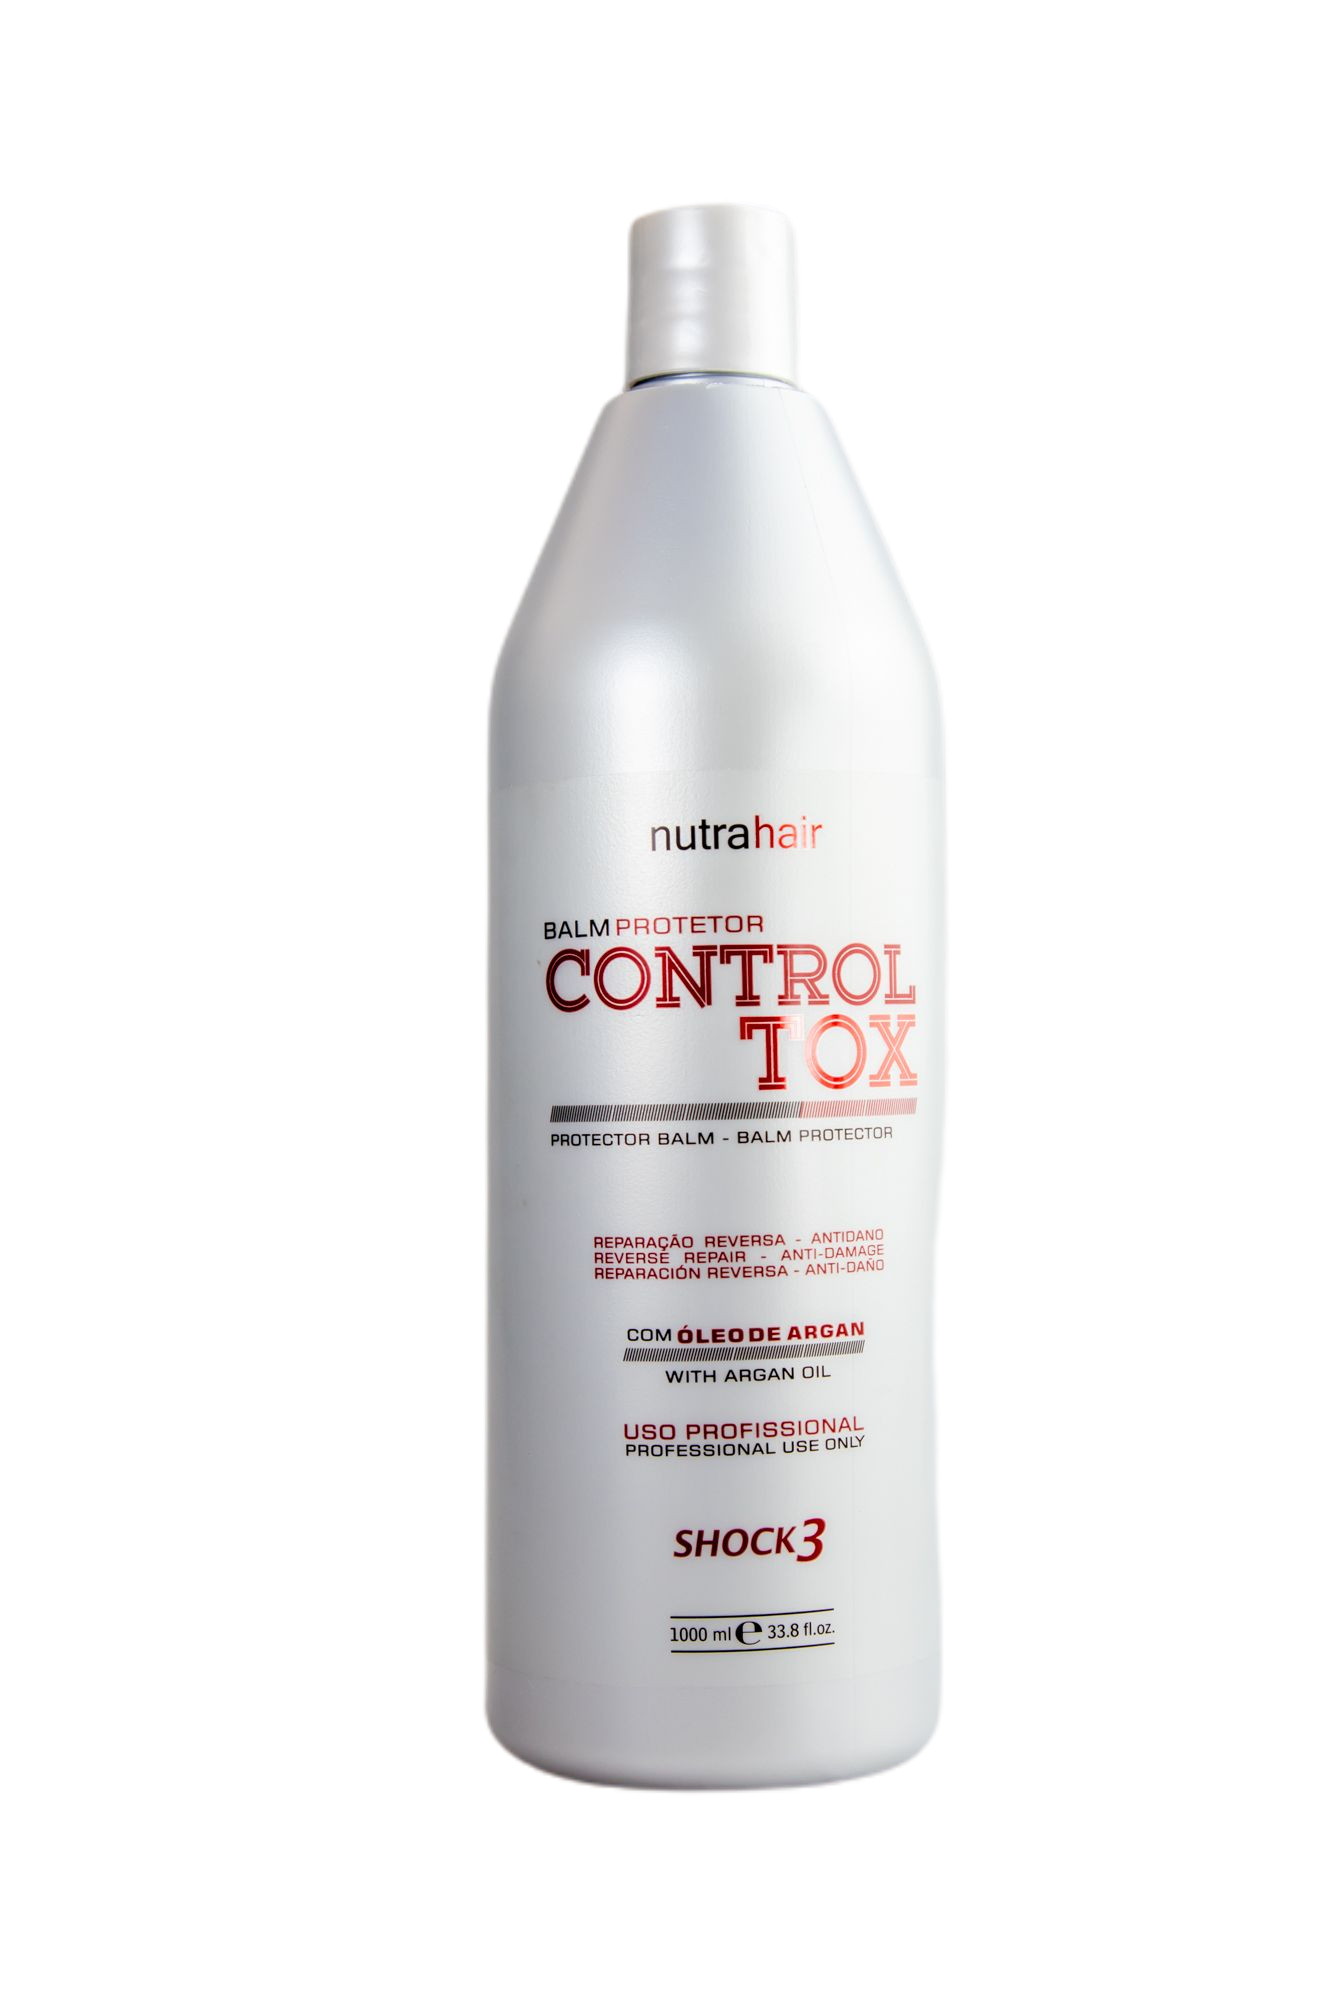 NutraHair Brazilian Keratin Treatment Argan Oil Thermal Protector Controltox Shock3 Protector Balm 1L - NutraHair